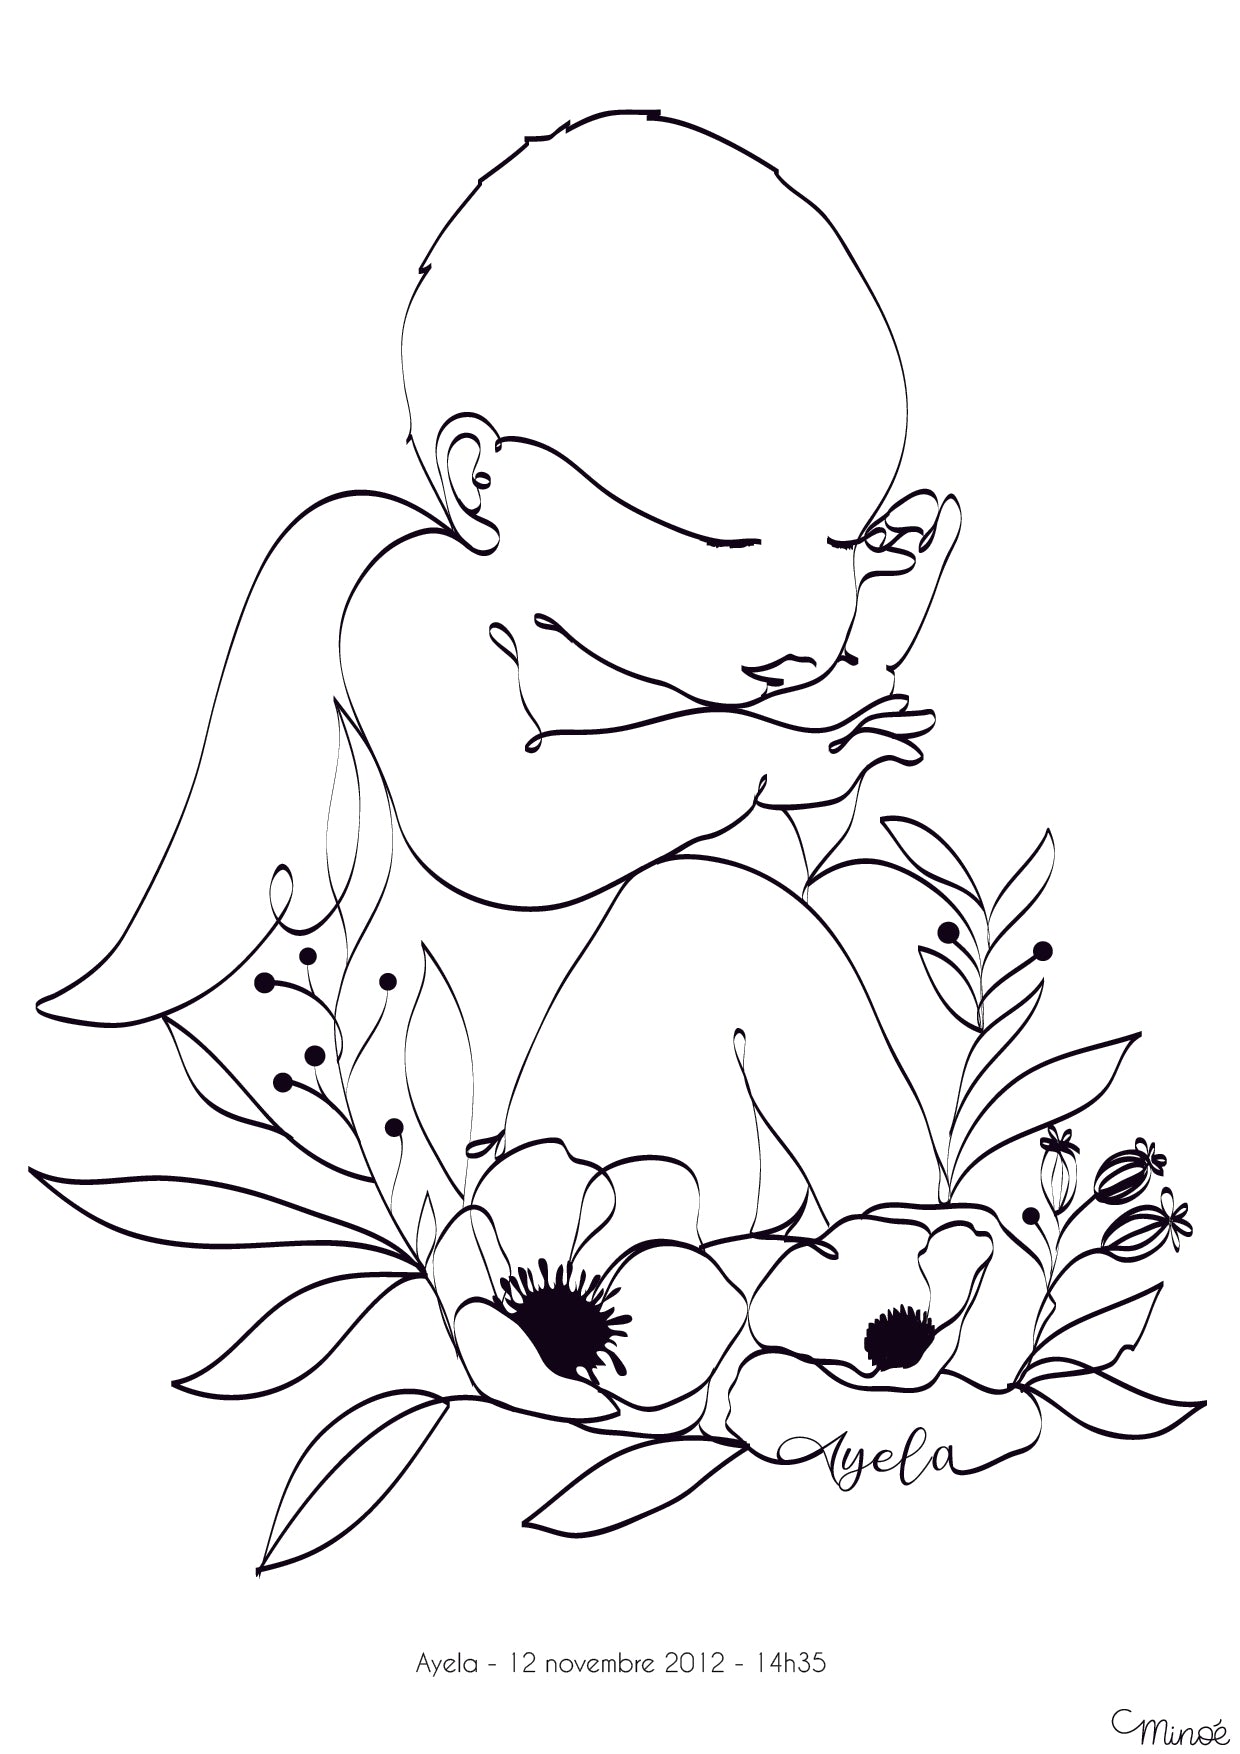 Illustration de naissance : bébé fleuri – Hey Minoe